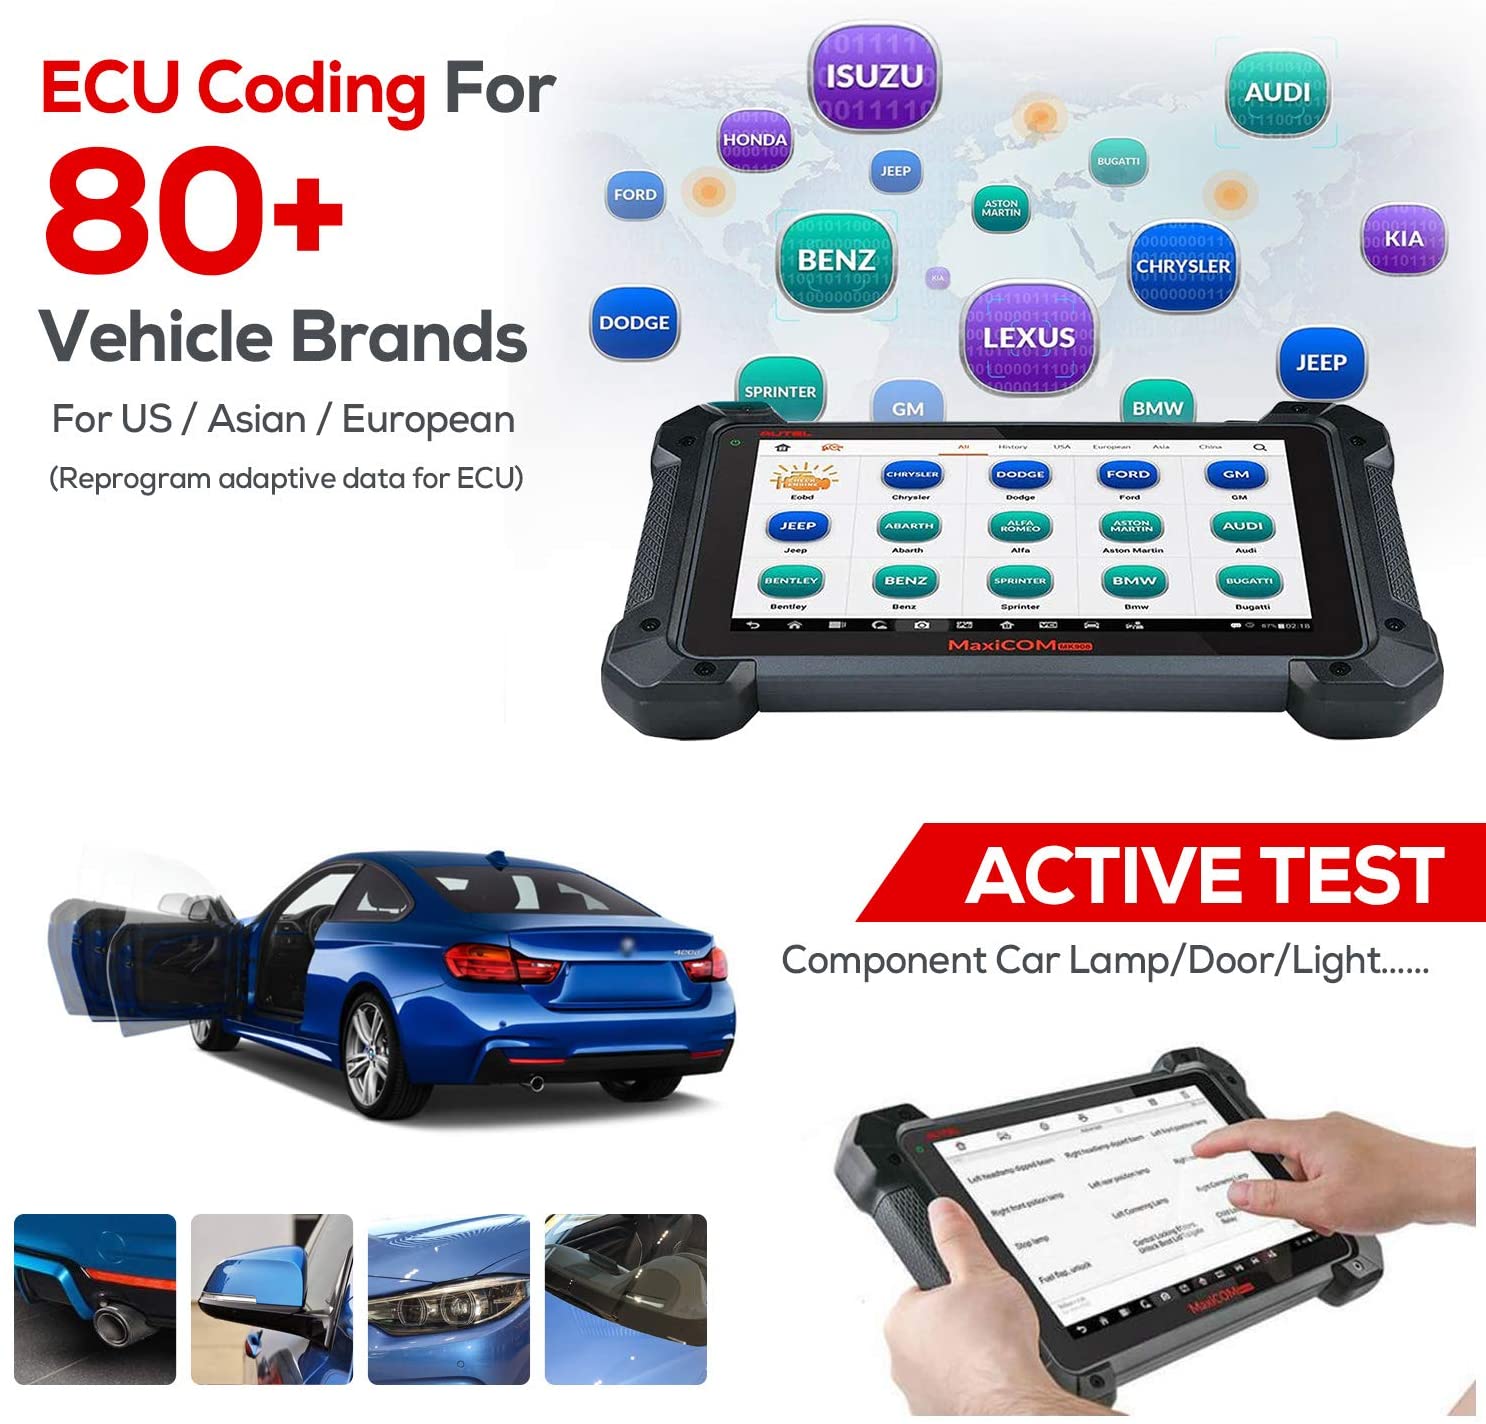 The ECU Coding of Autel MK908 coverage 80+ vehicle brands